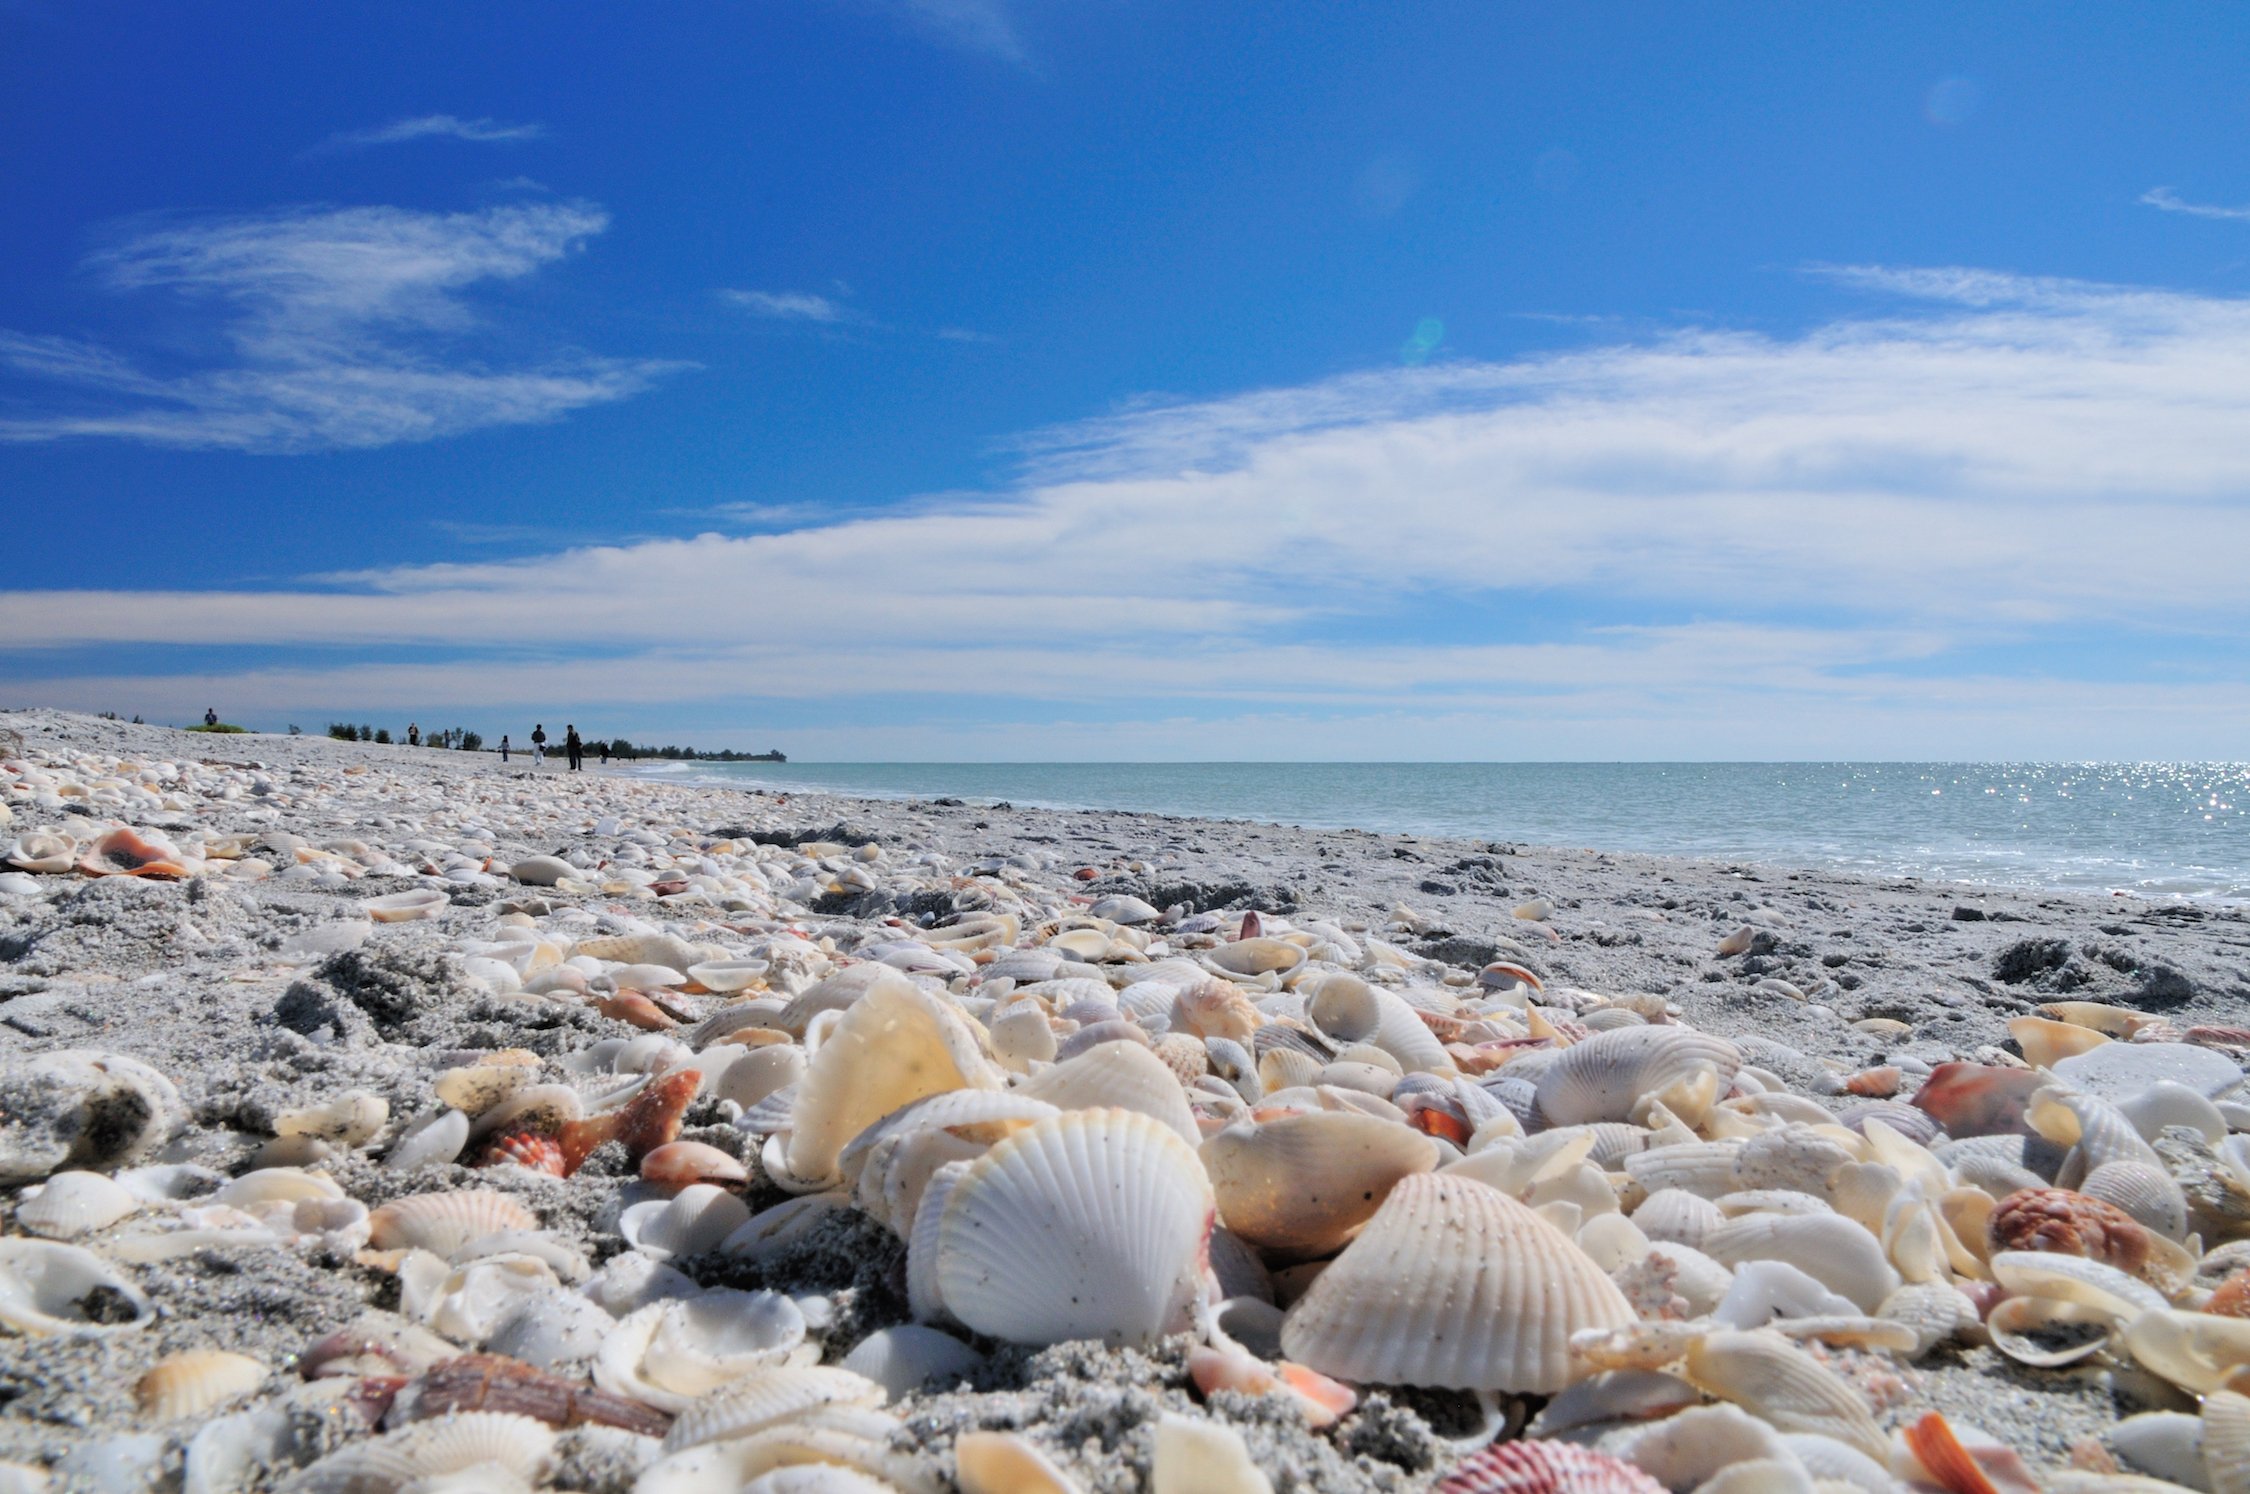 Seashell News, 3-1-15: Tons Of Shells On Bowman's Beach, Sanibel Island, By Gregory Moine, Via Creative Commons.